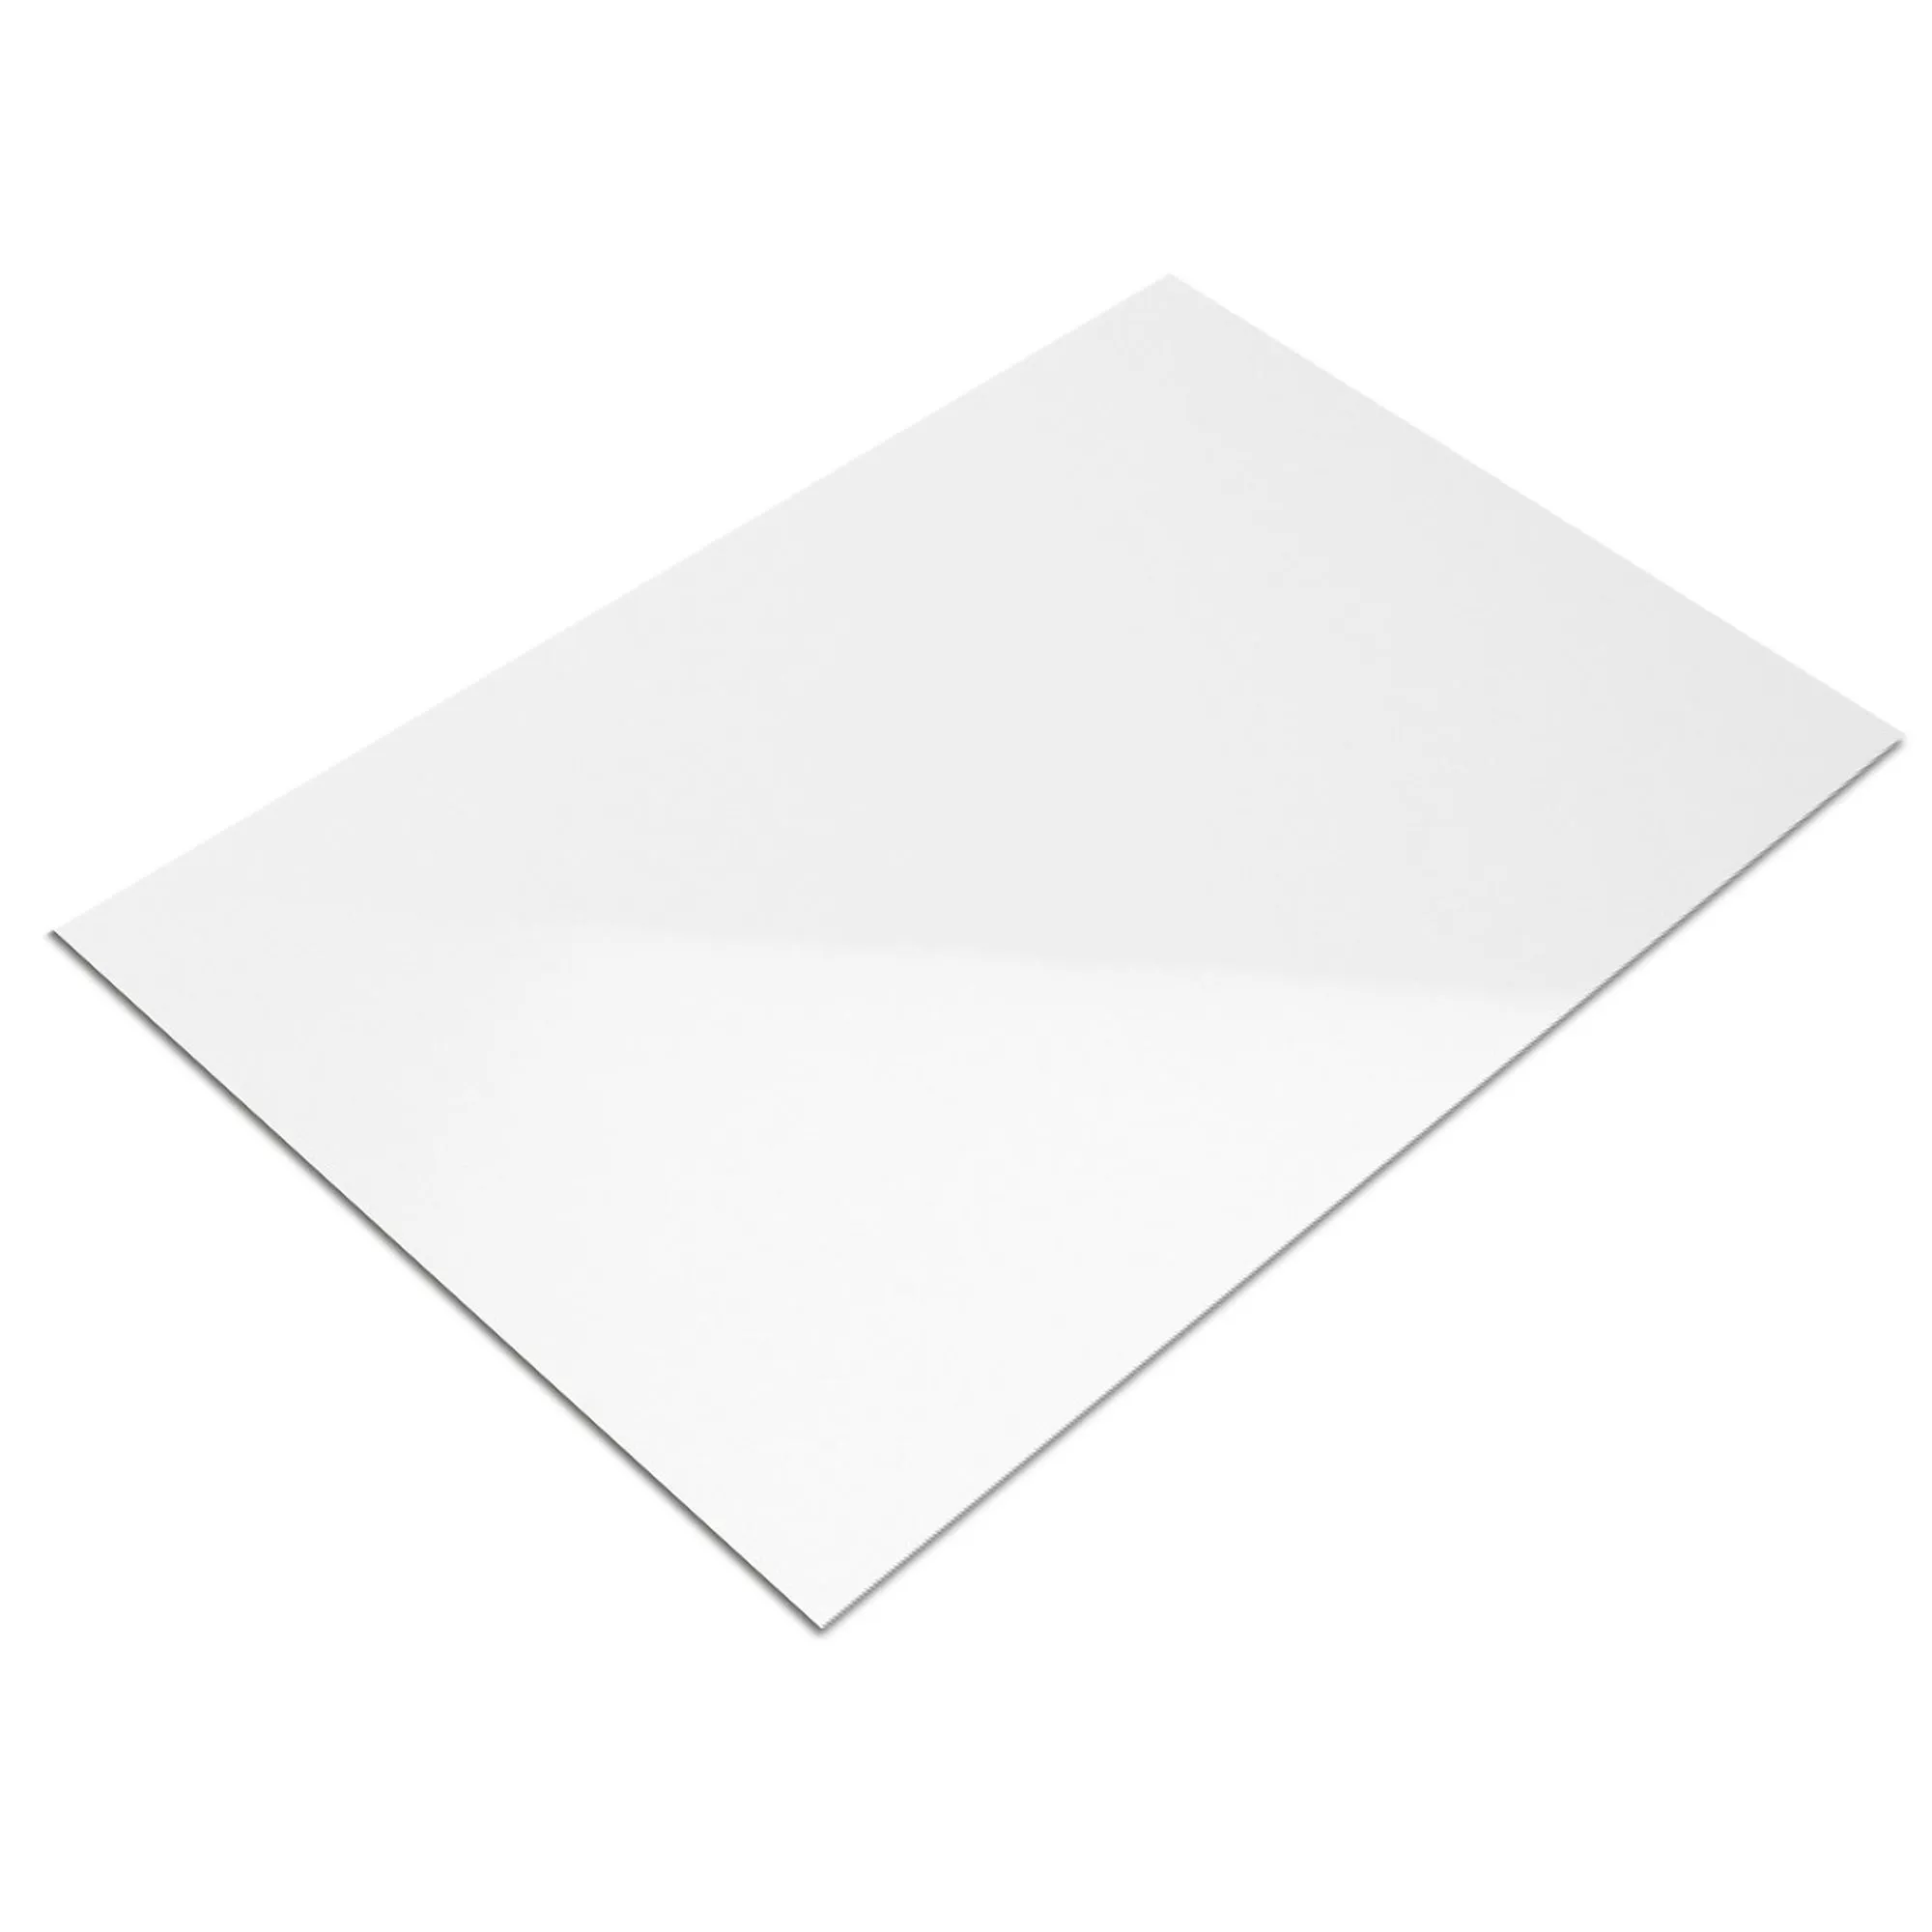 Sample Wall Tiles Fenway White Glossy 20x25cm